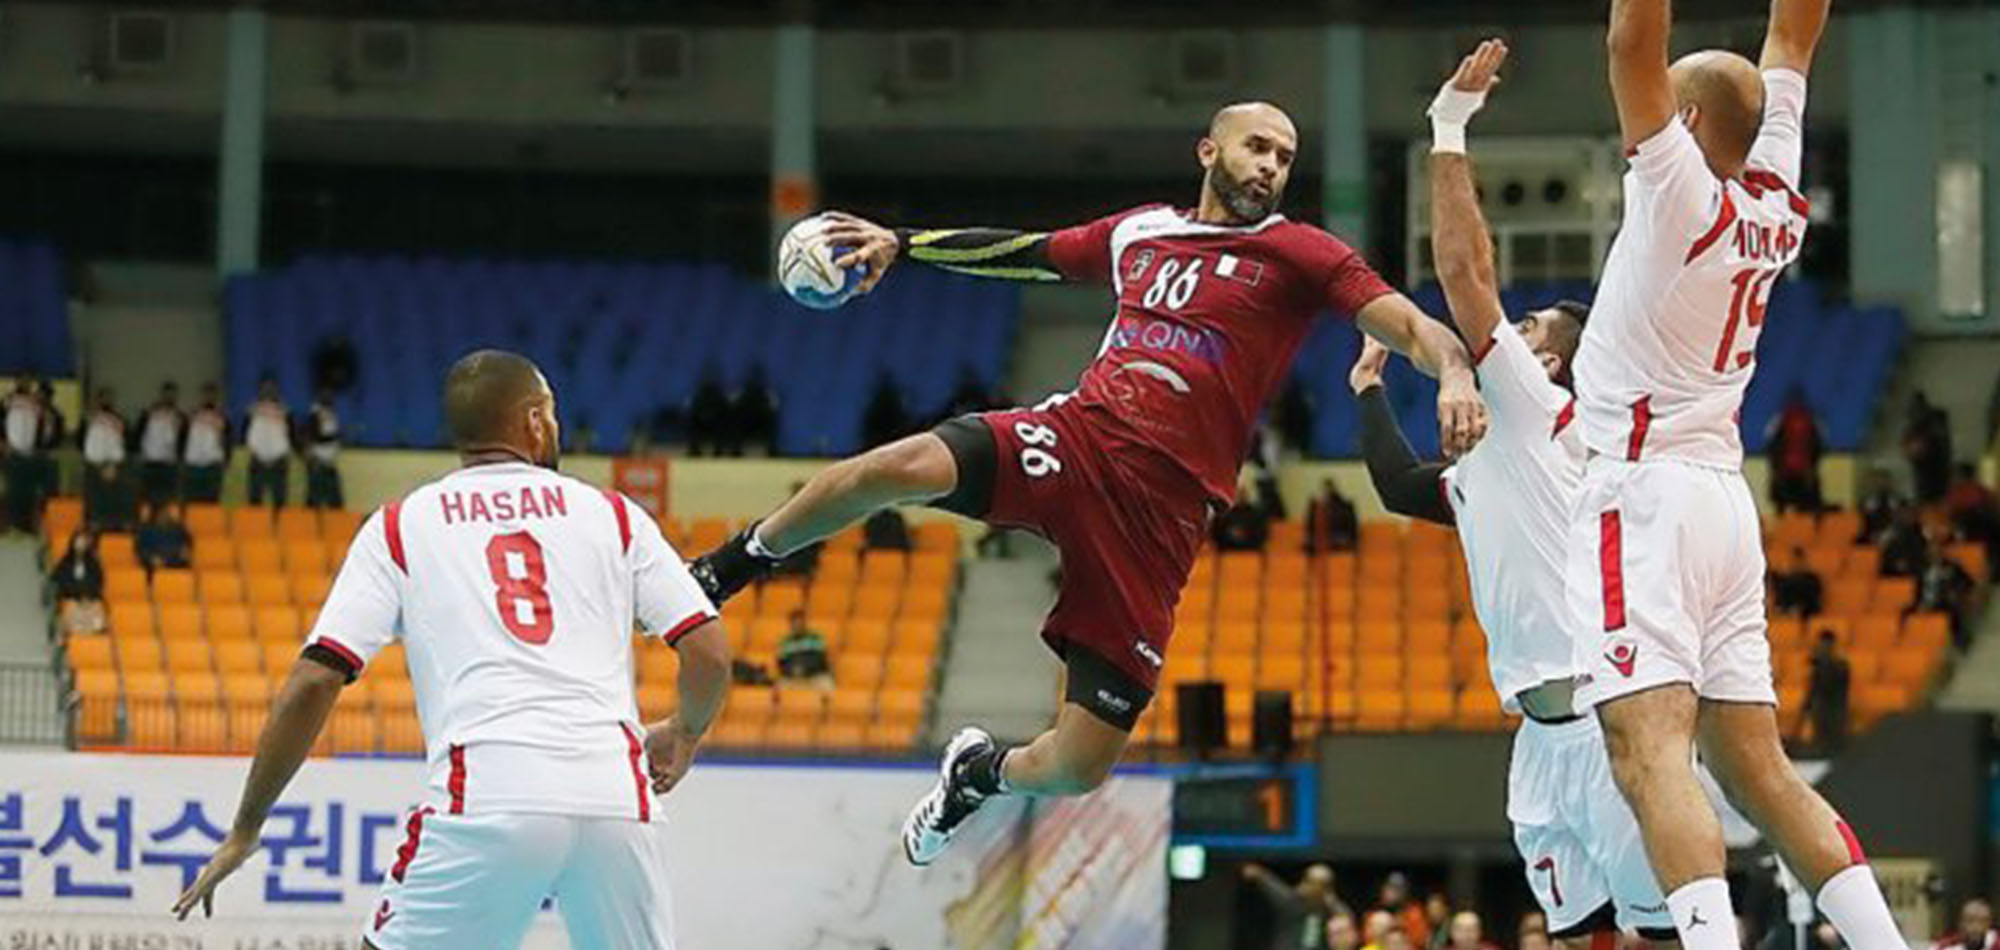 Qatar Handball Team Sets Up Training Camp in Spain Before World Championship